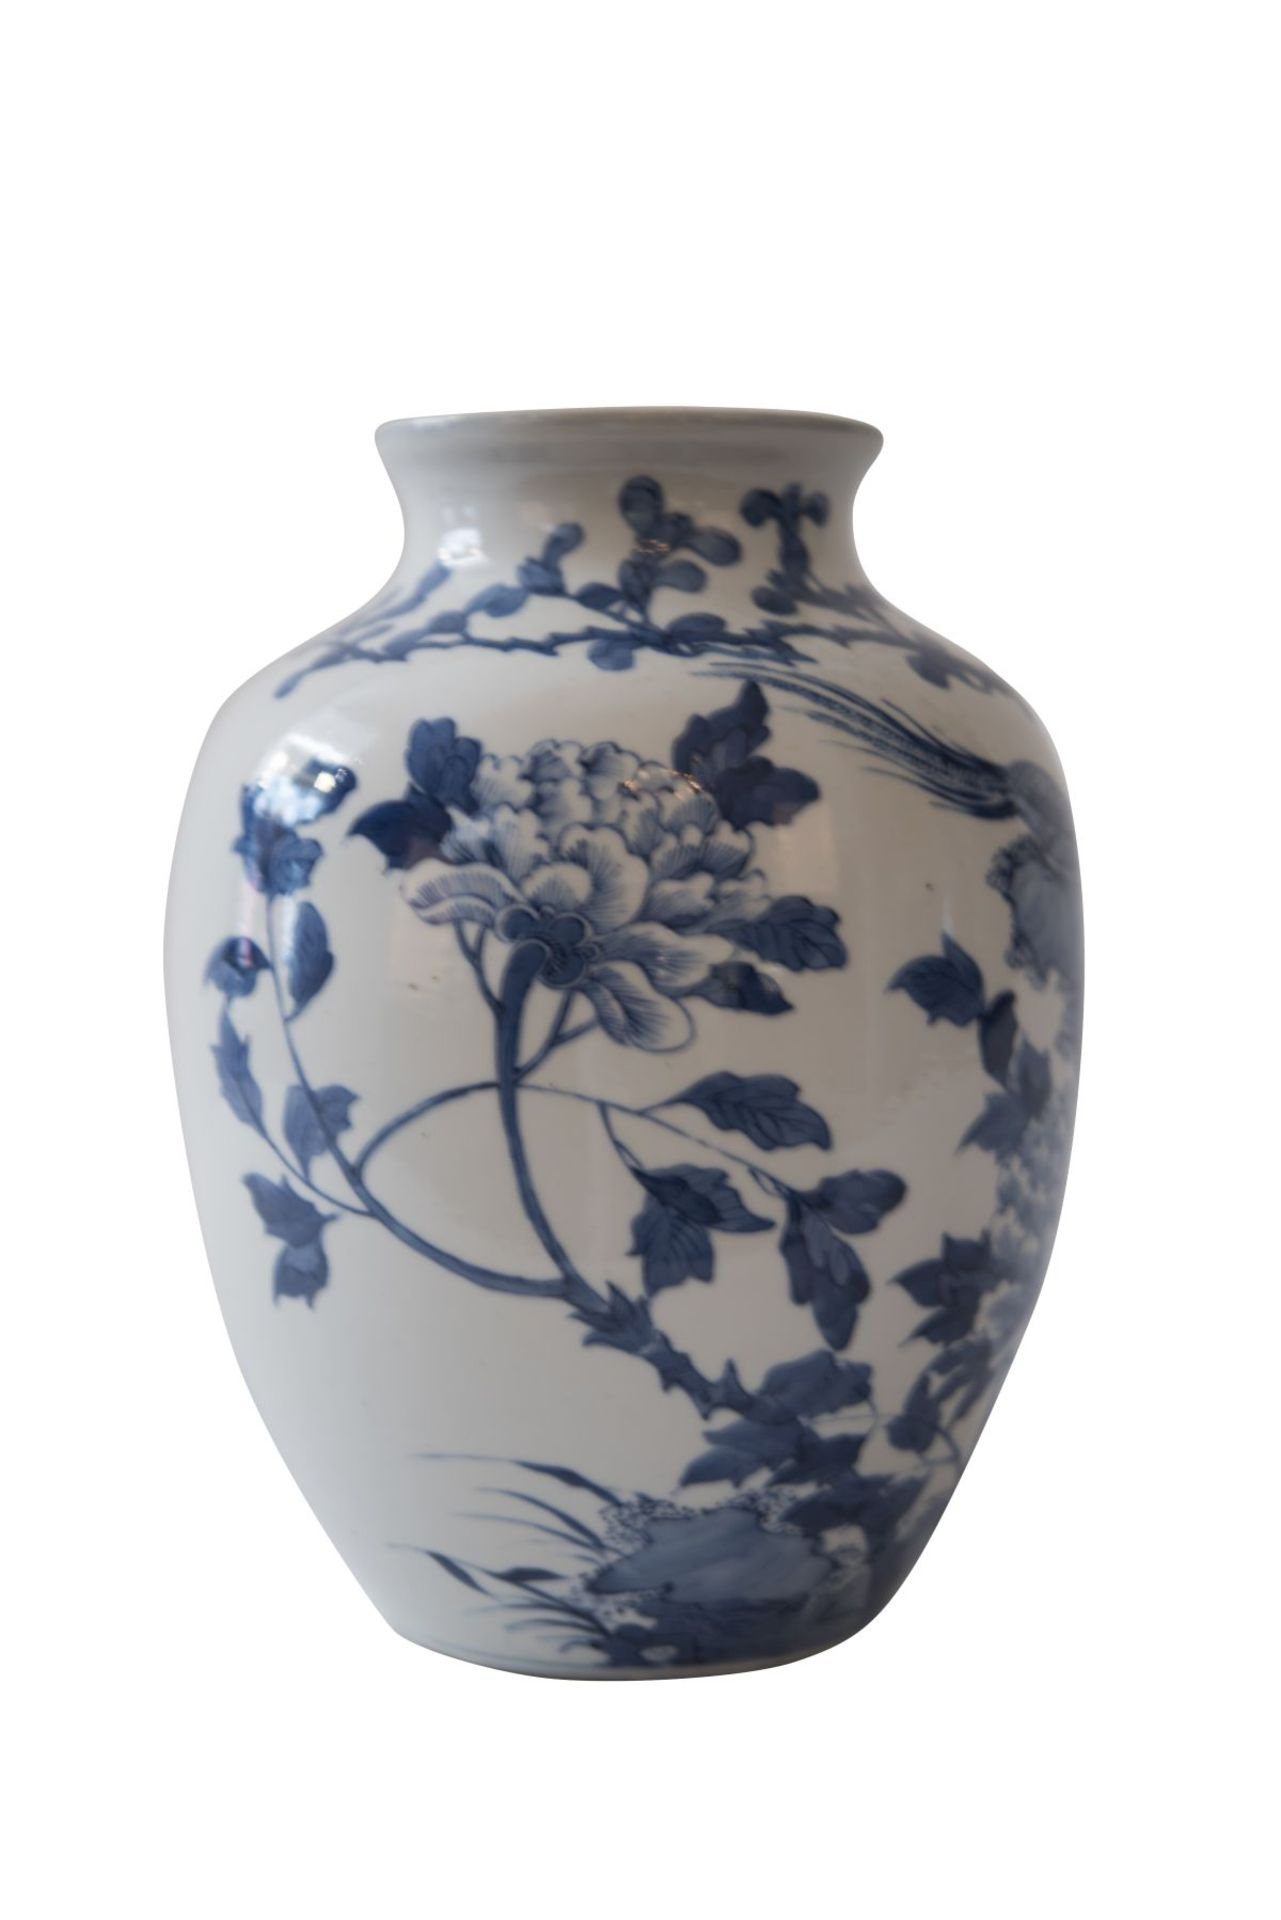 Blue and white vase - Image 5 of 8